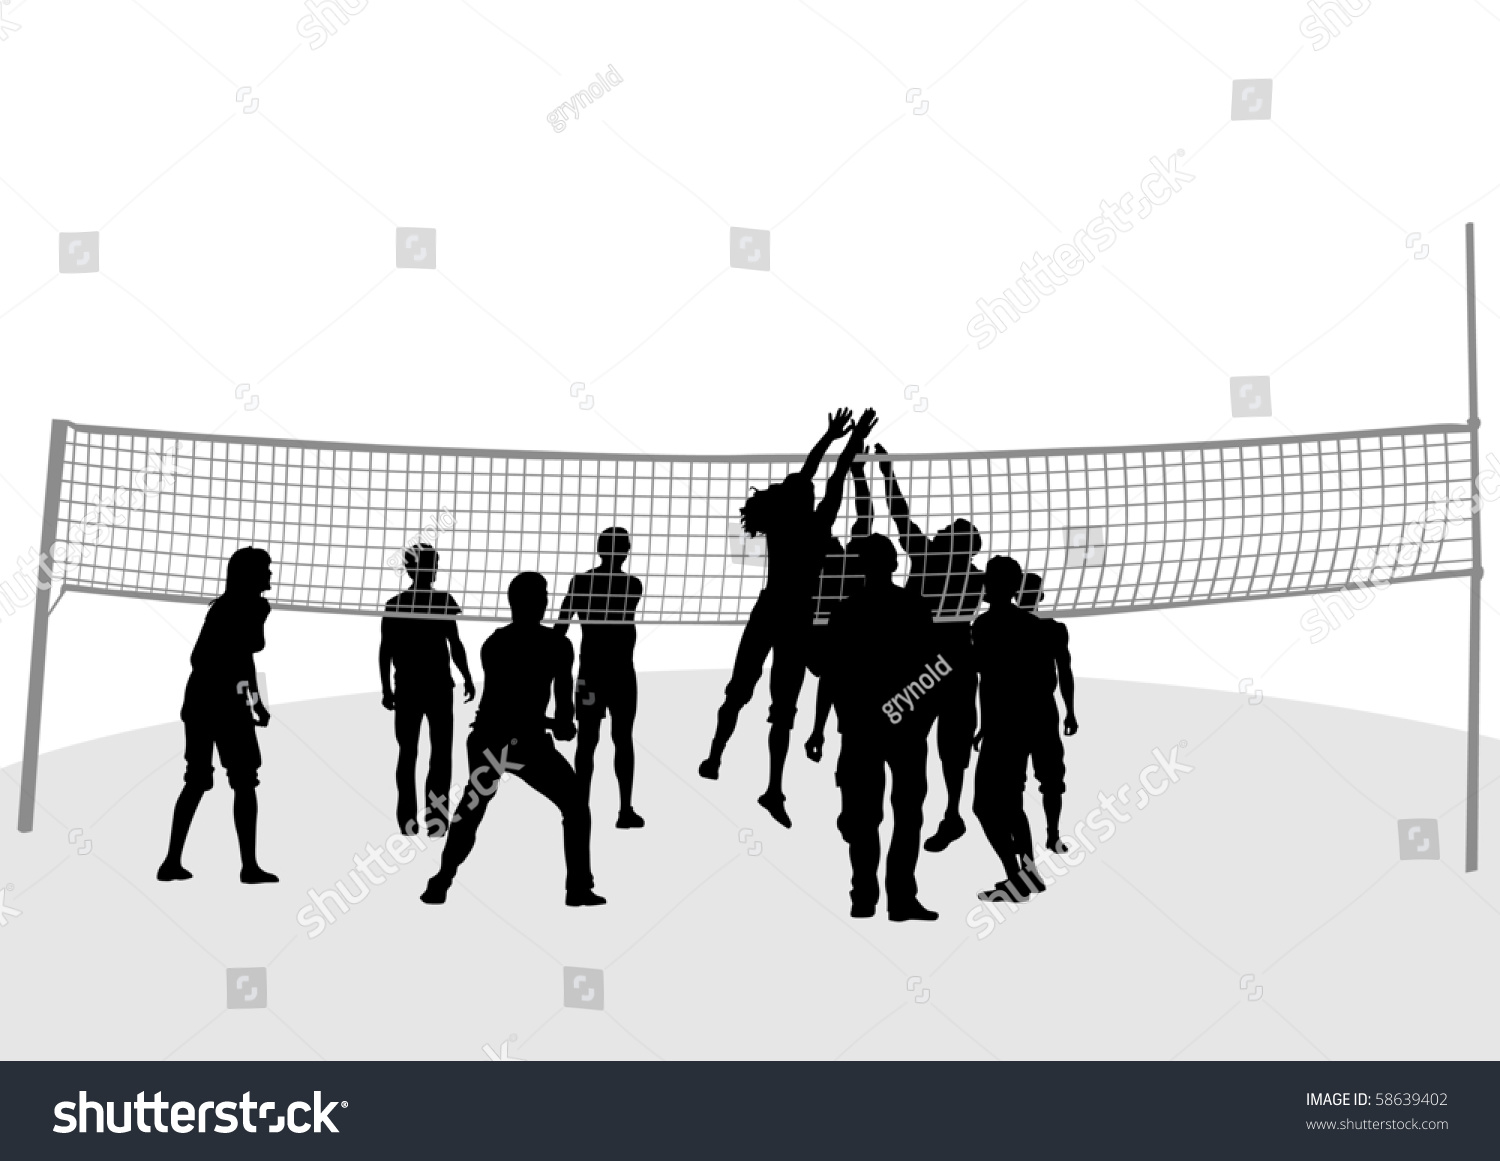 Drawing Jumping Around Volleyball Nets Stock Photo 58639402 : Shutterstock